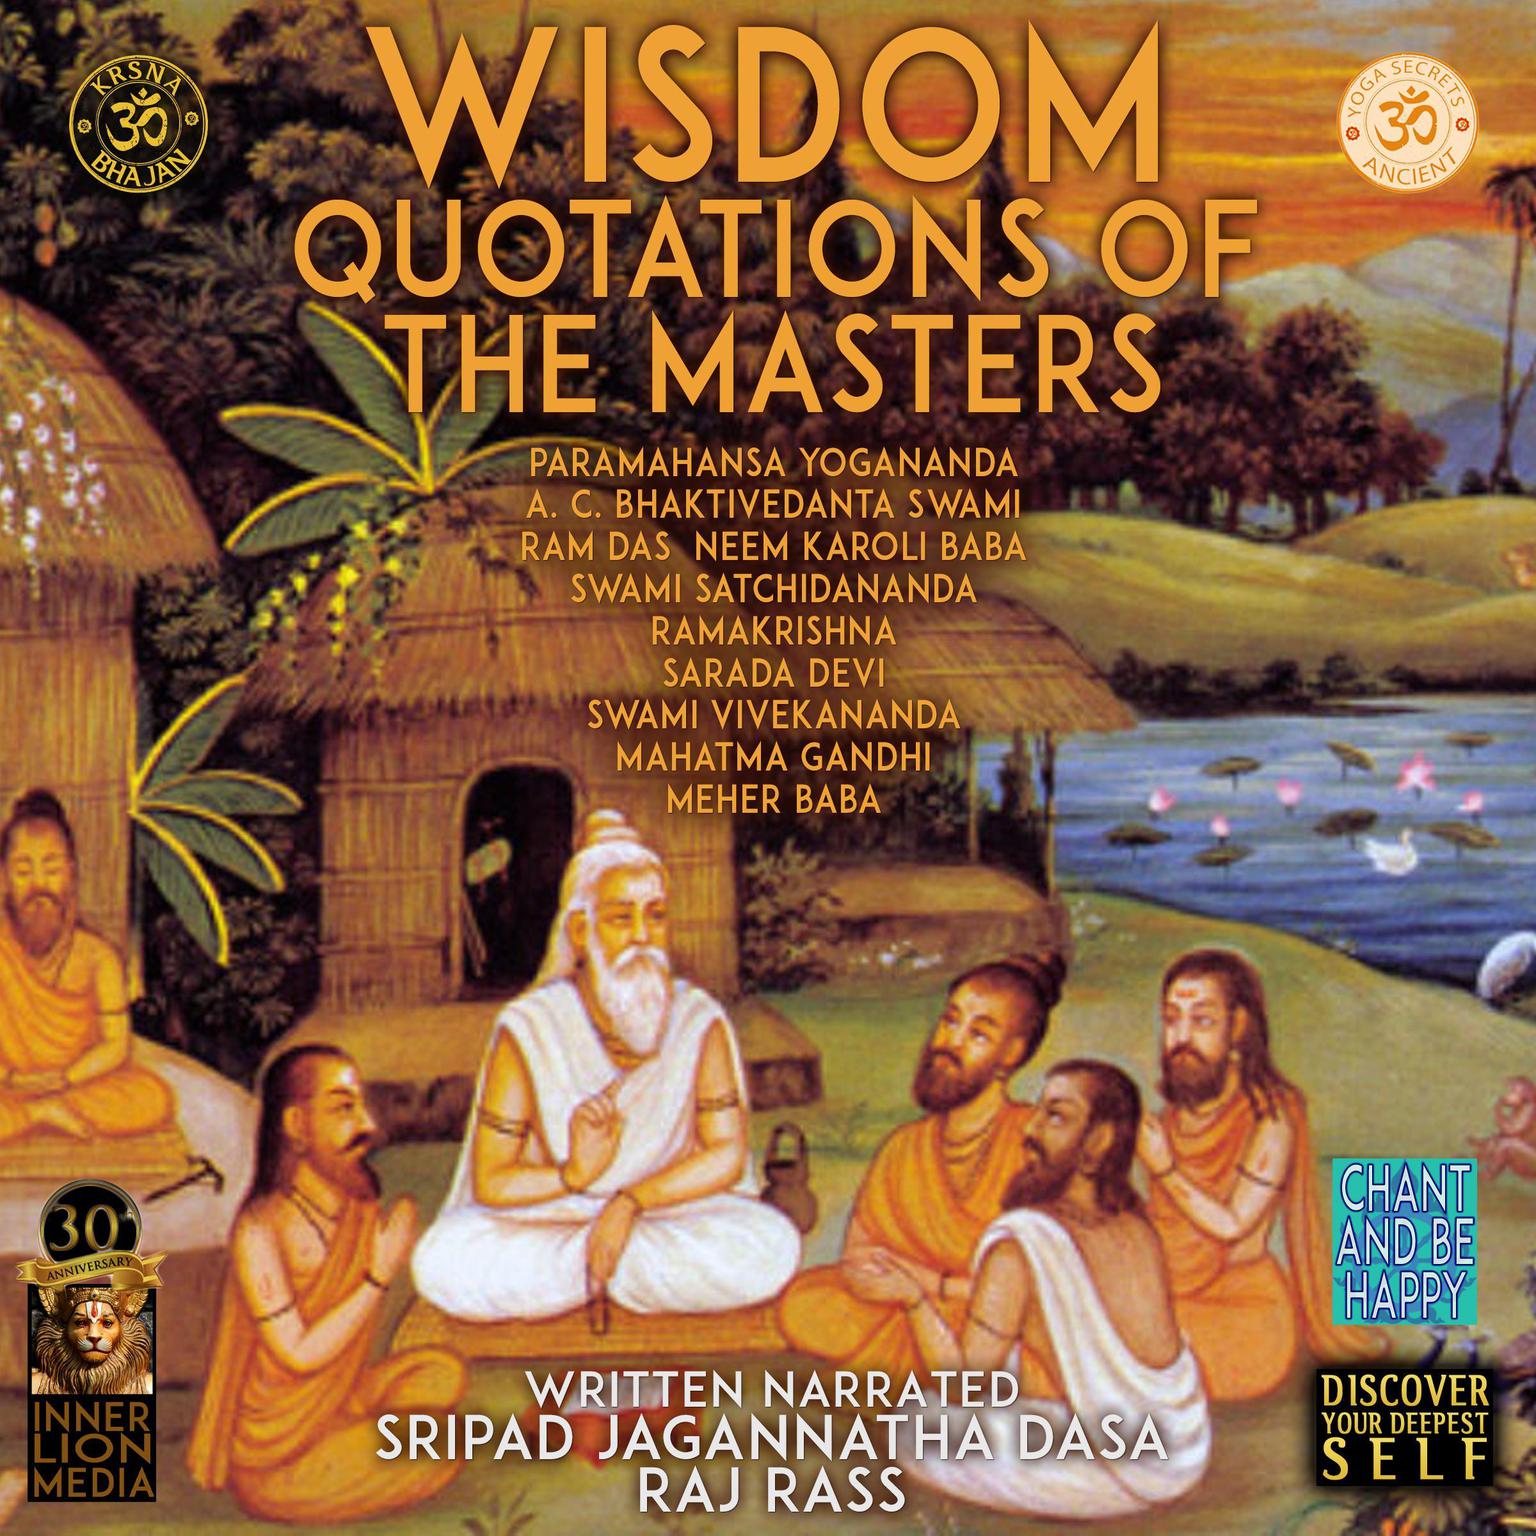 Wisdom Quotations Of The Masters - Paramahansa Yogananda, A.C. Bhaktivedanta Swami, Ram Das, Neem Karoli Baba, Swami Satchidananda, Ramakrishna, Sarada Devi, Swami Vivekananda, Mahatma Gandhi, Meher Baba Audiobook, by Jagannatha Dasa